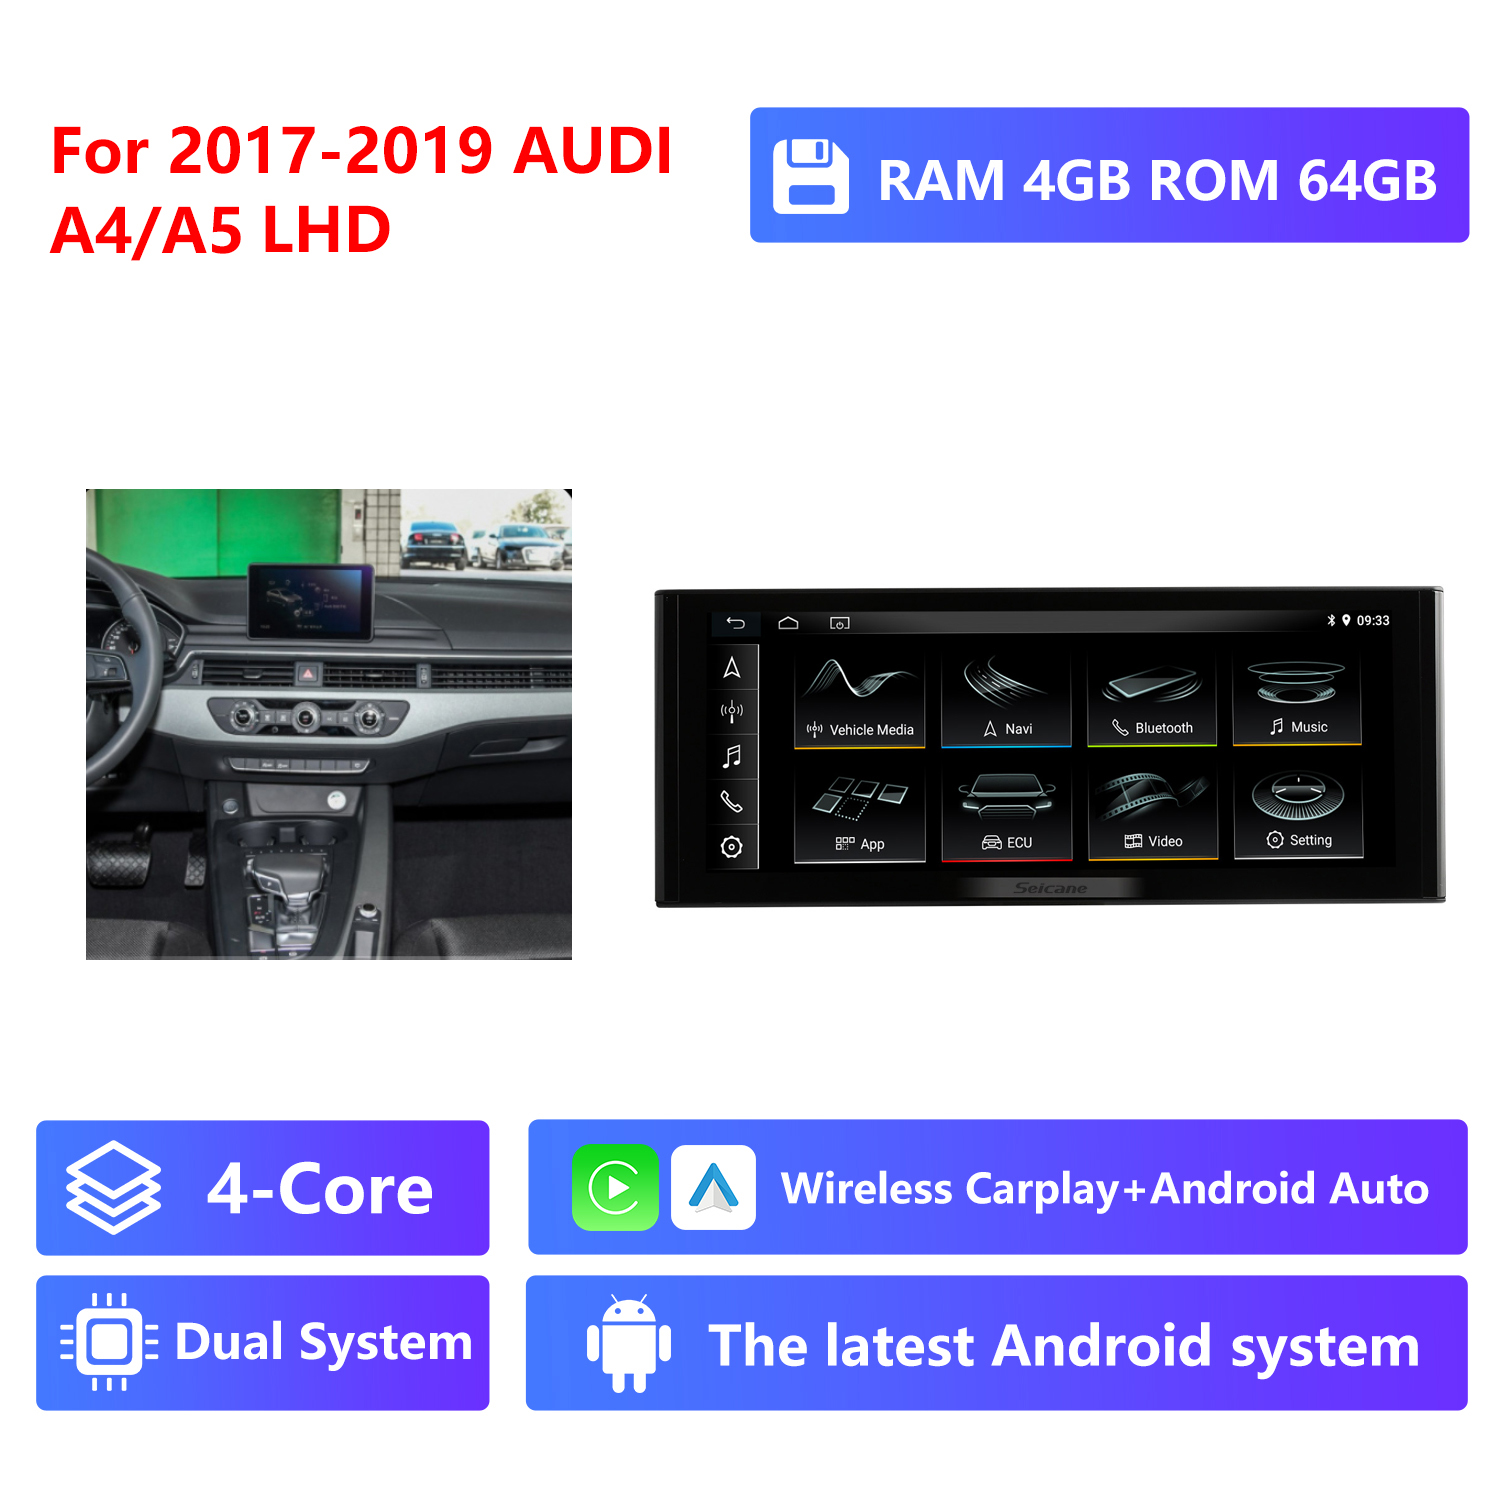 4-Core RAM 4G ROM 64G,2017-2019,High version,LHD